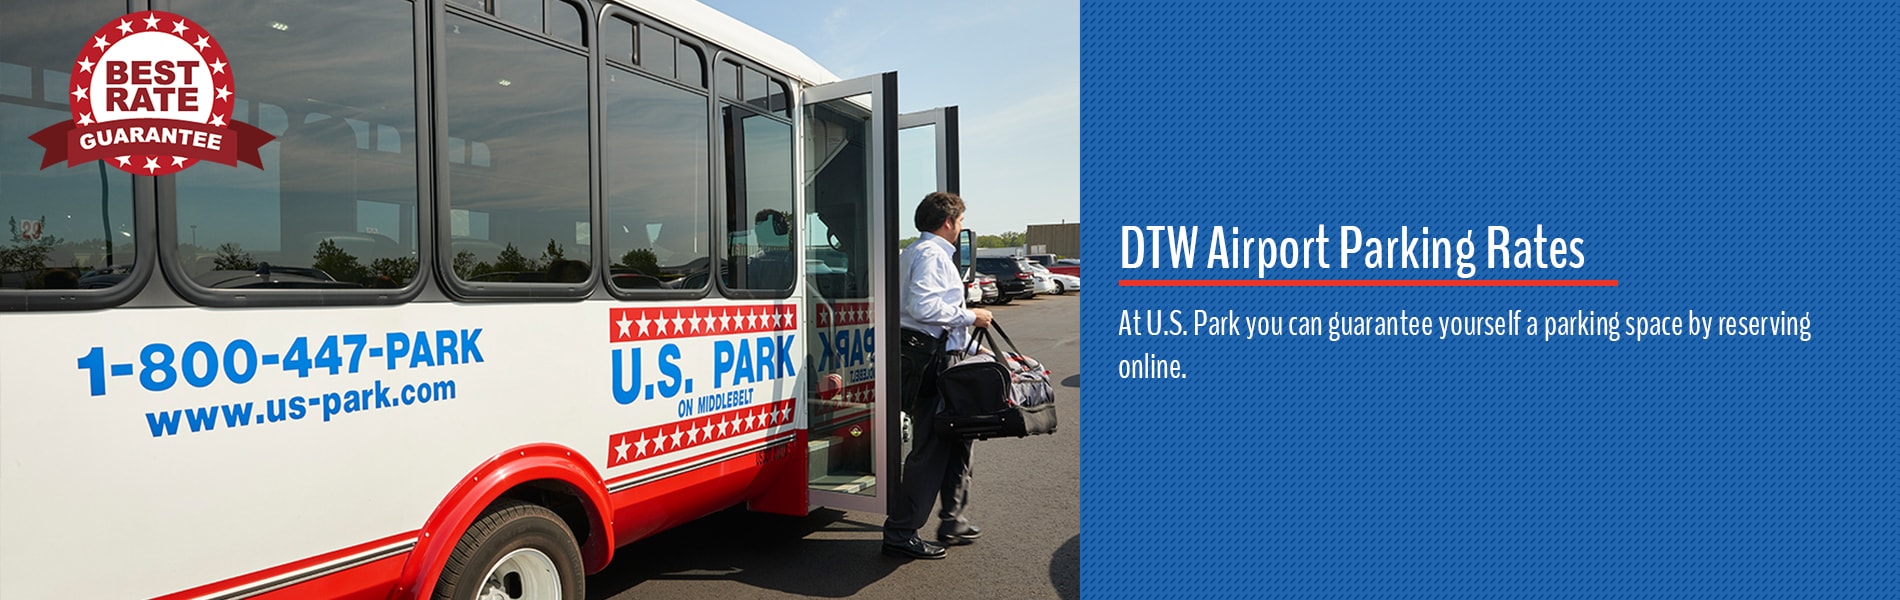 DTW Airport Parking Rates